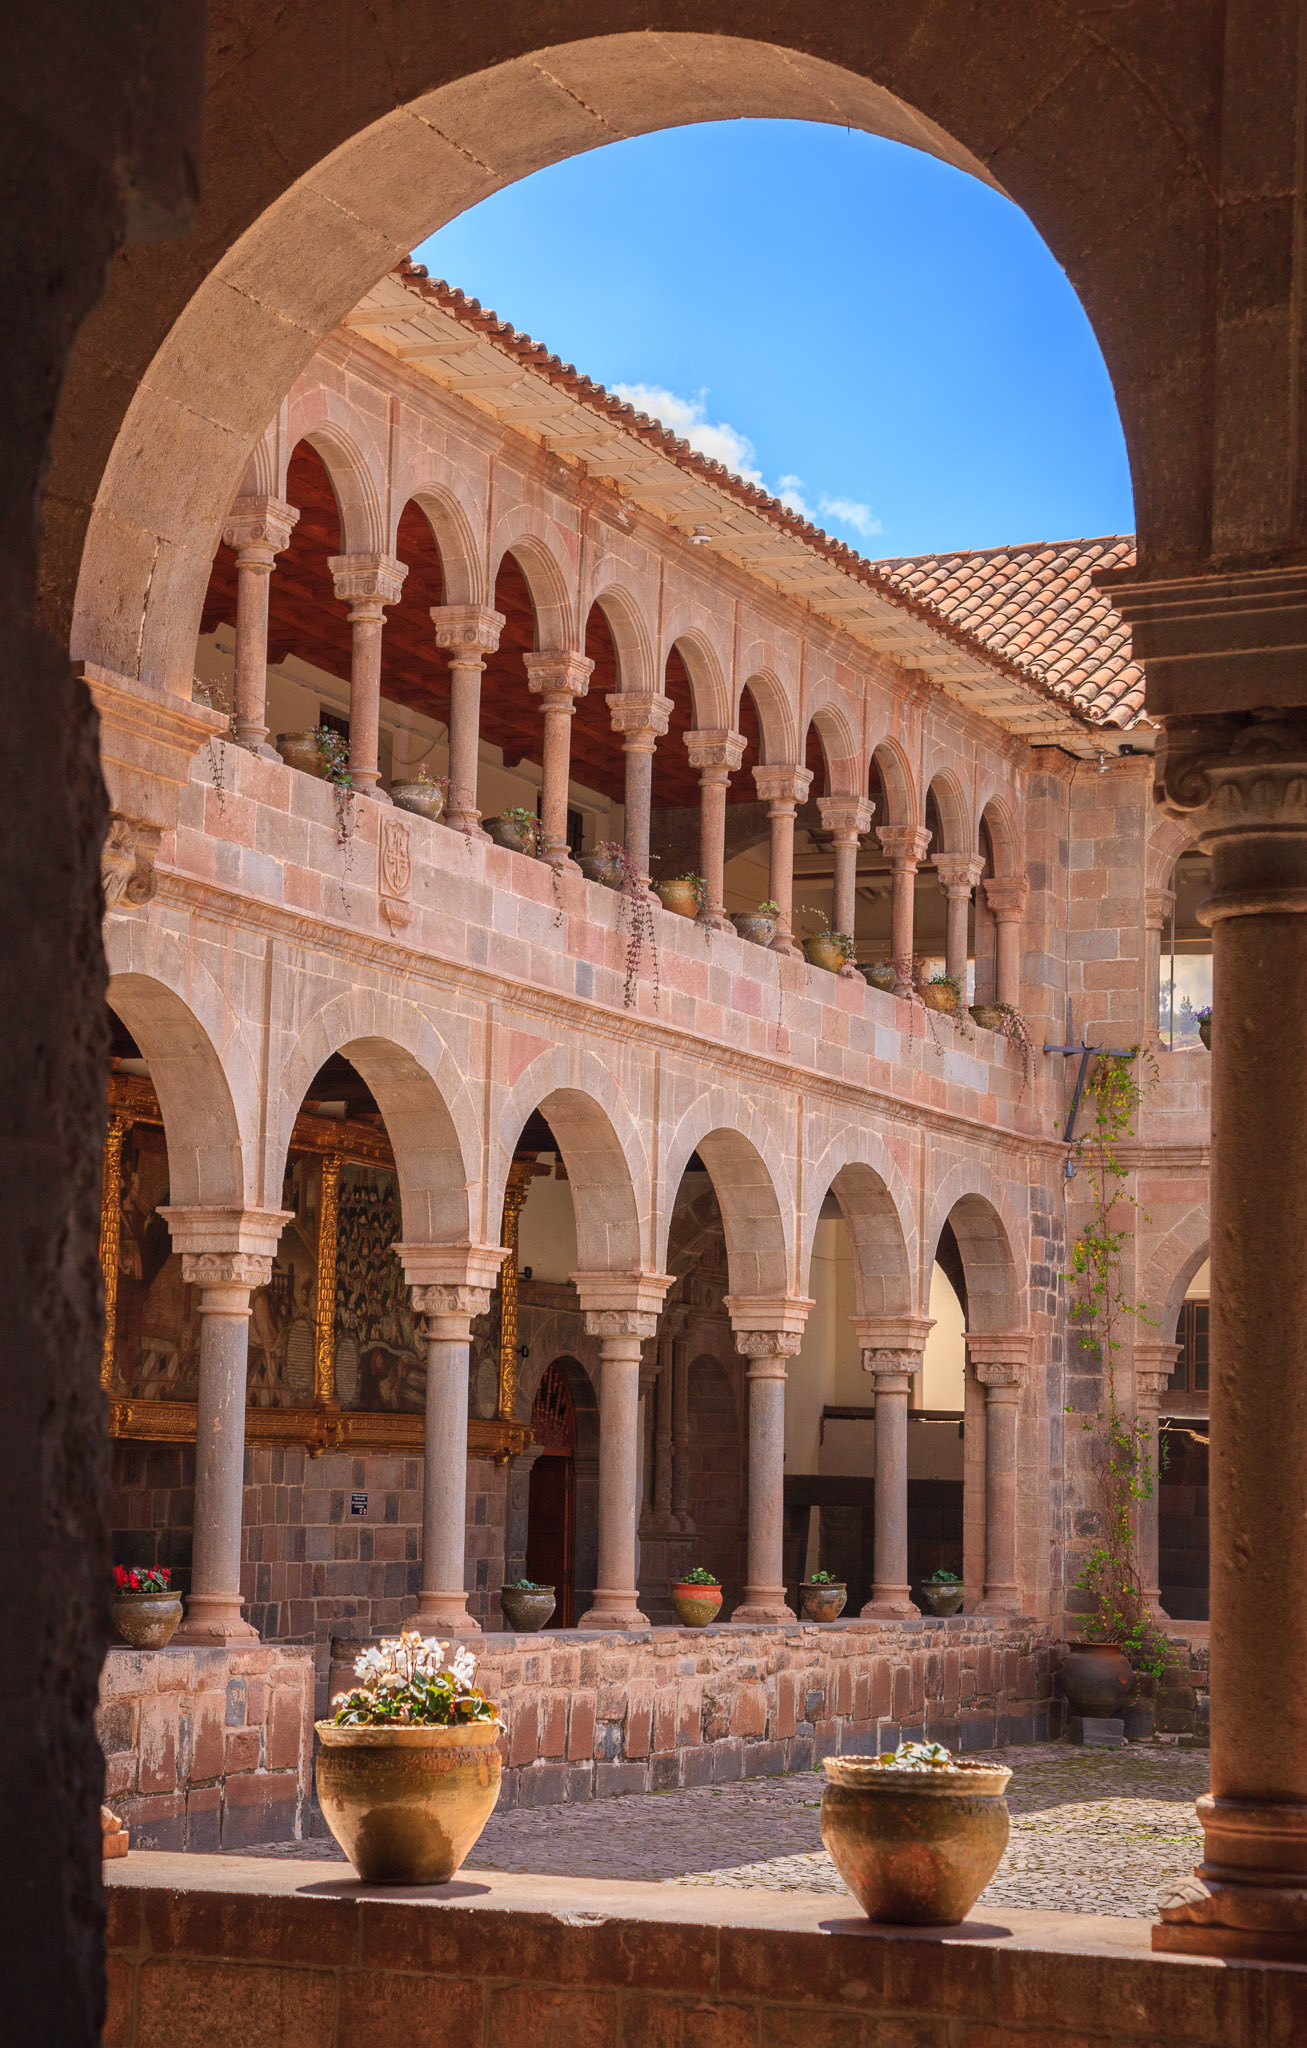 Santo Domingo Convent courtyard (aka Koricancha Inca Temple)